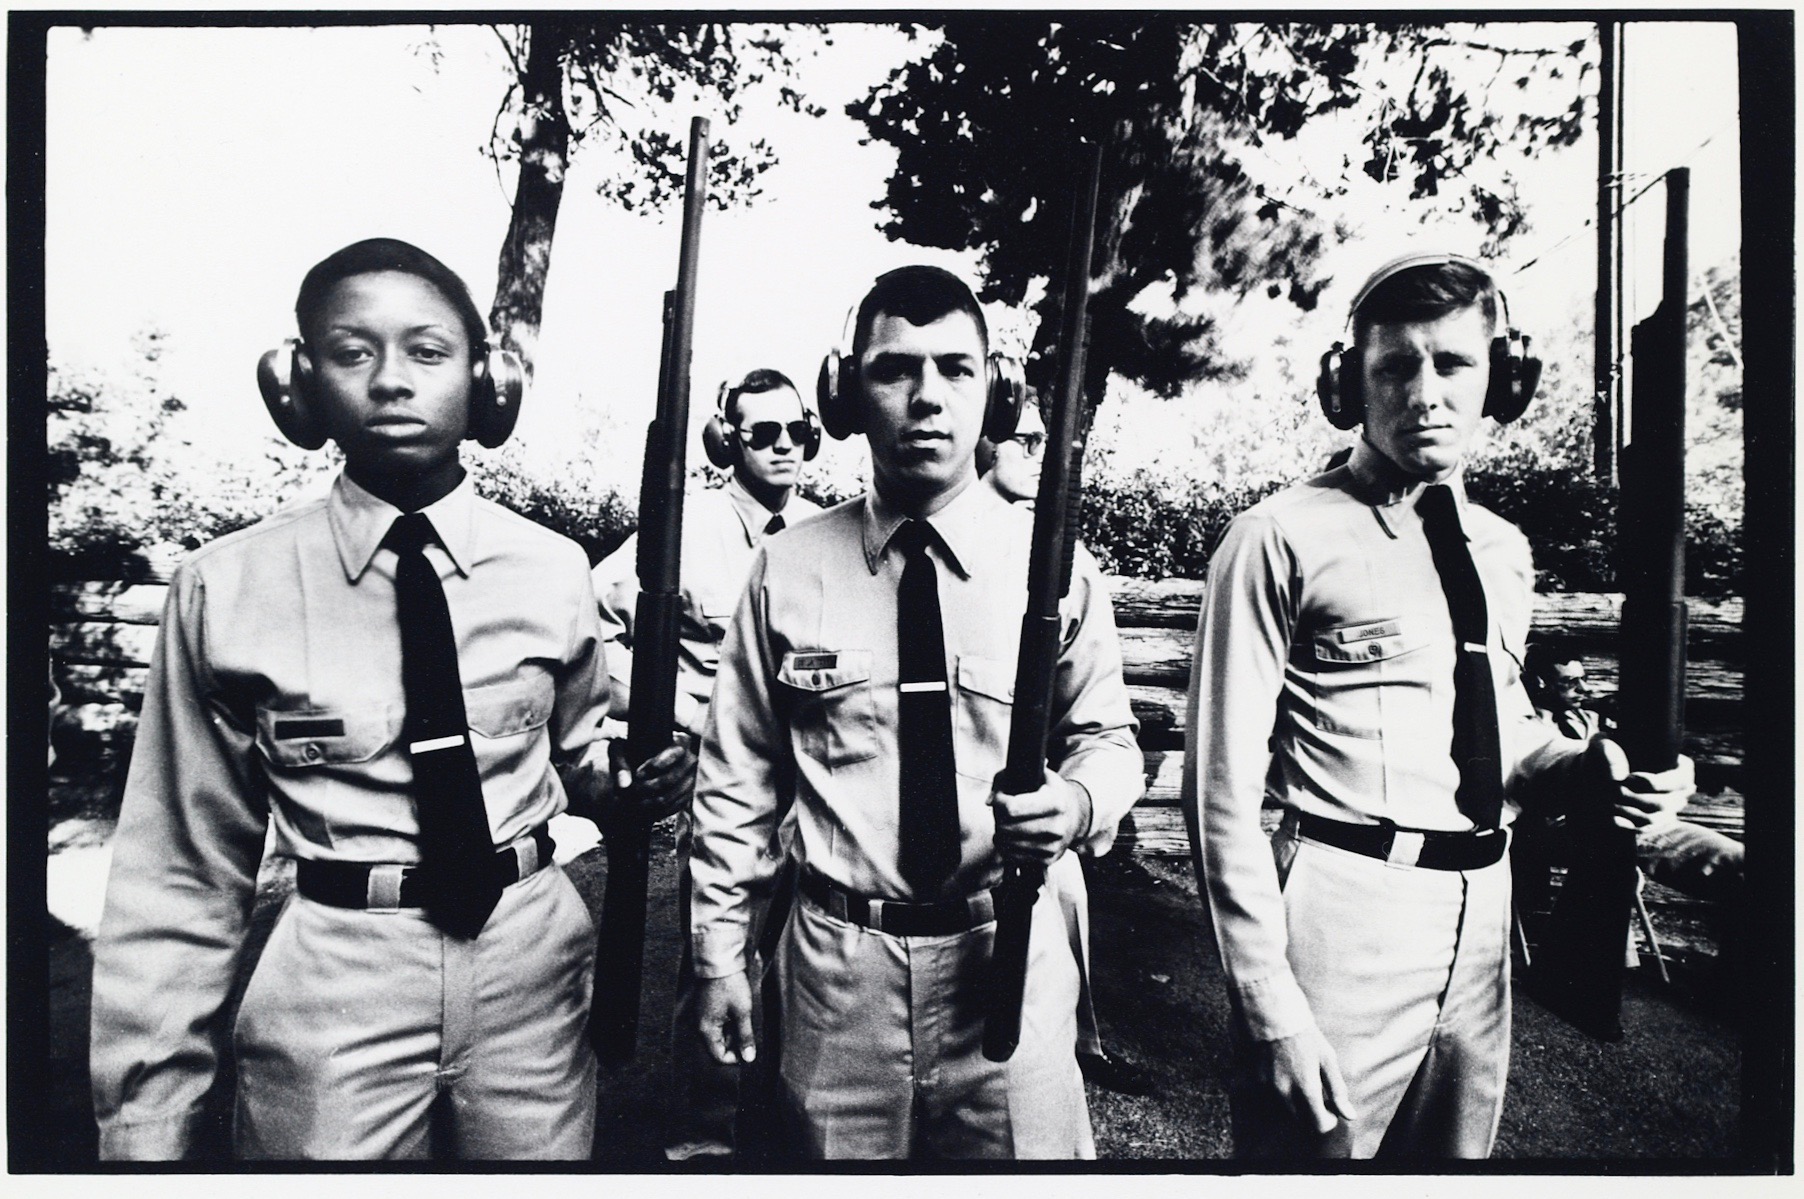 L.A. POLICE ACADEMY (1979-1980)